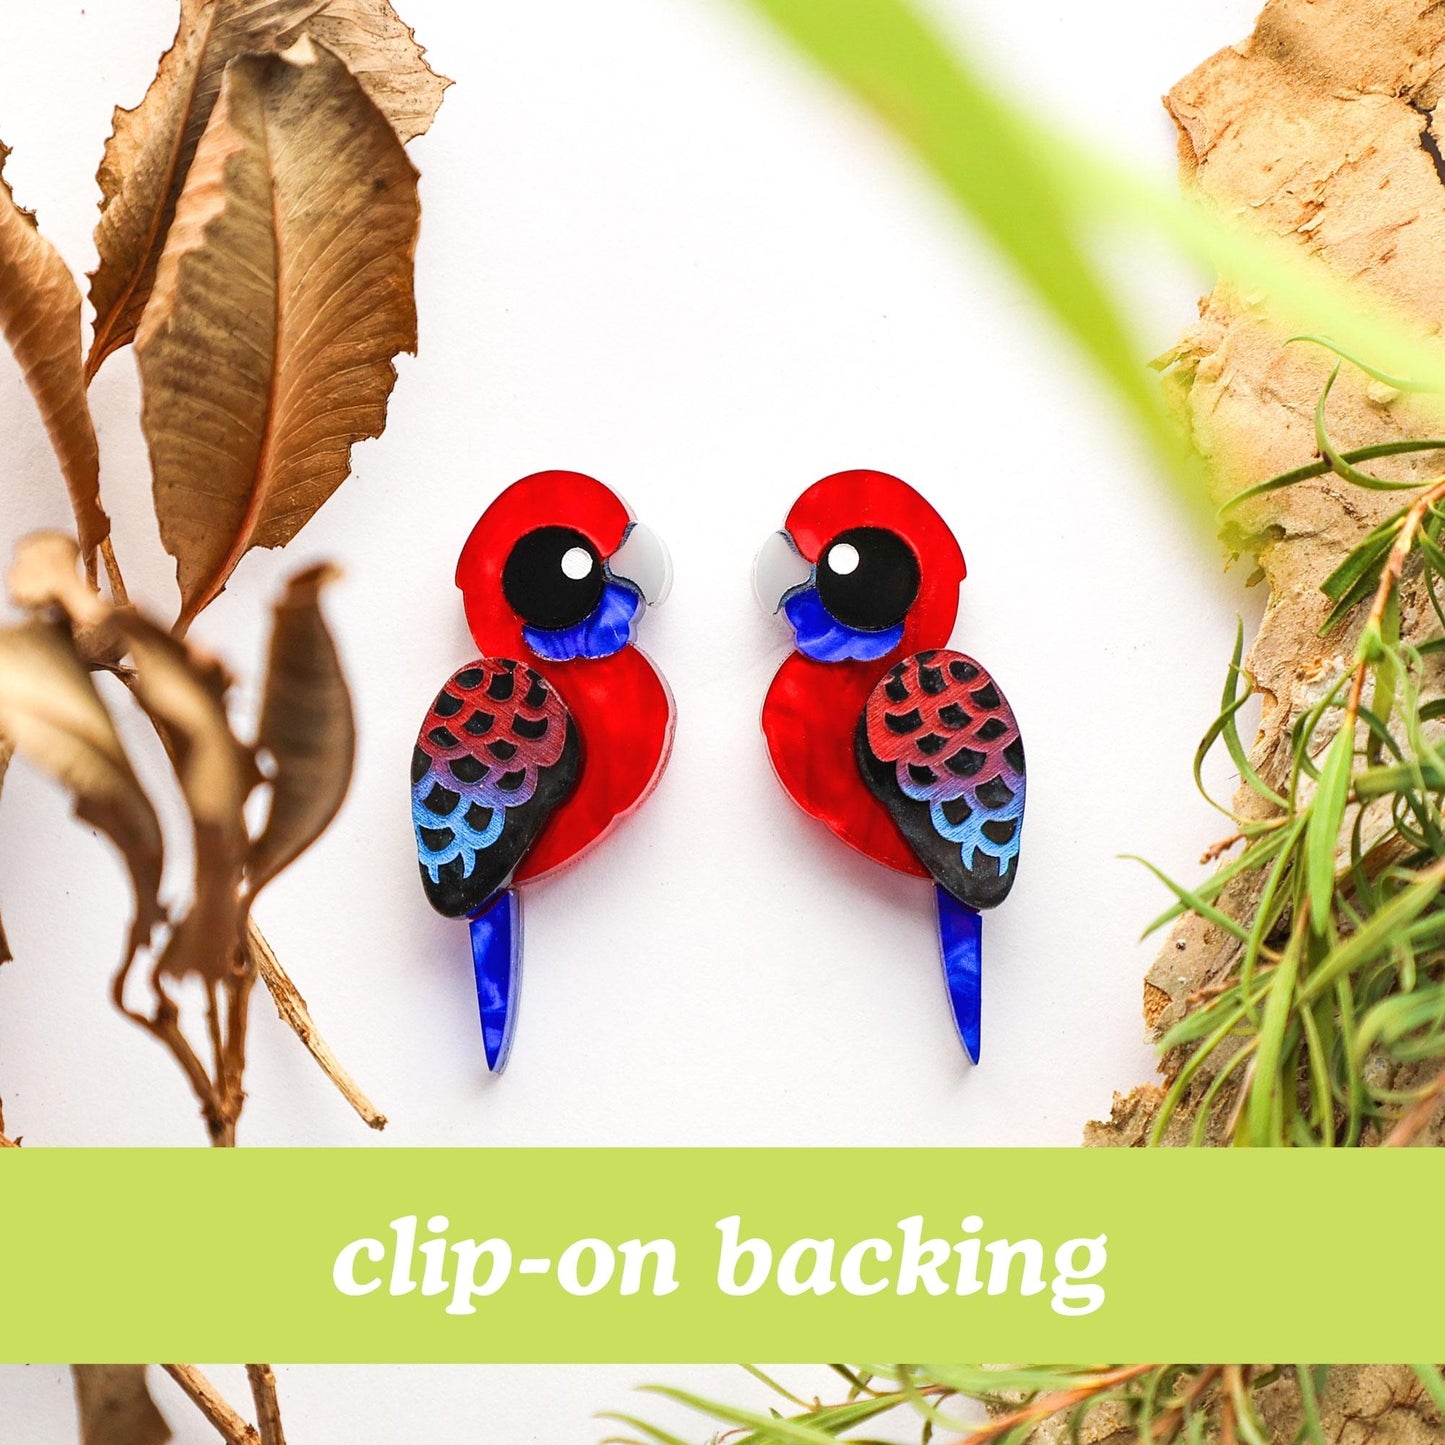 Crimson Rosella Studs - Statement Bird Earrings